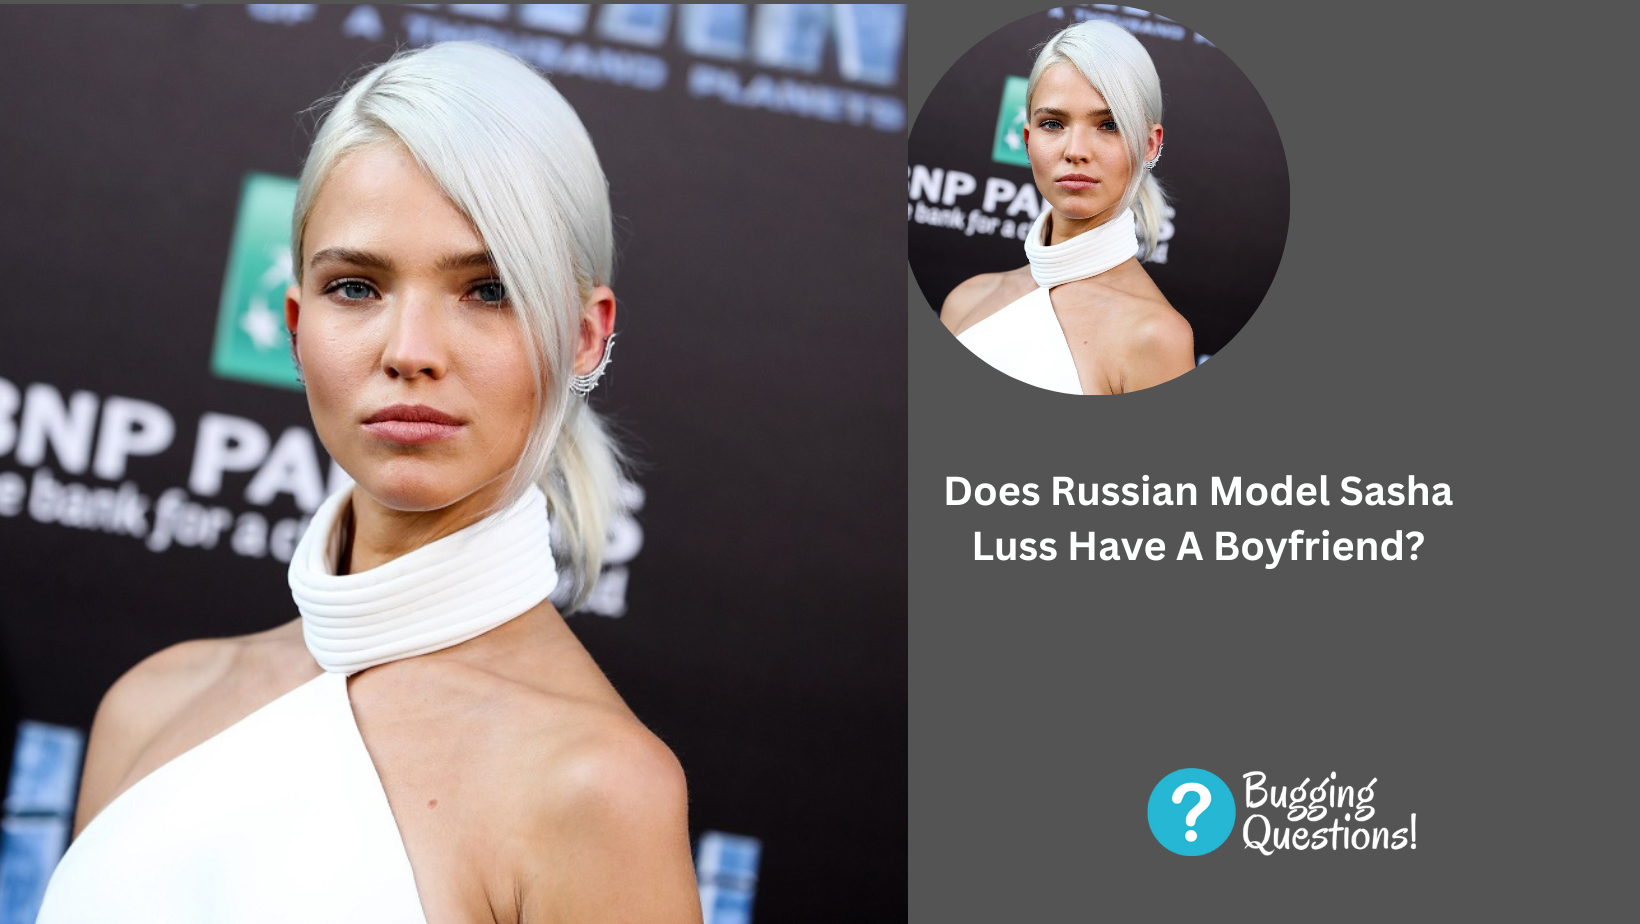 Does Russian Model Sasha Luss Have A Boyfriend?